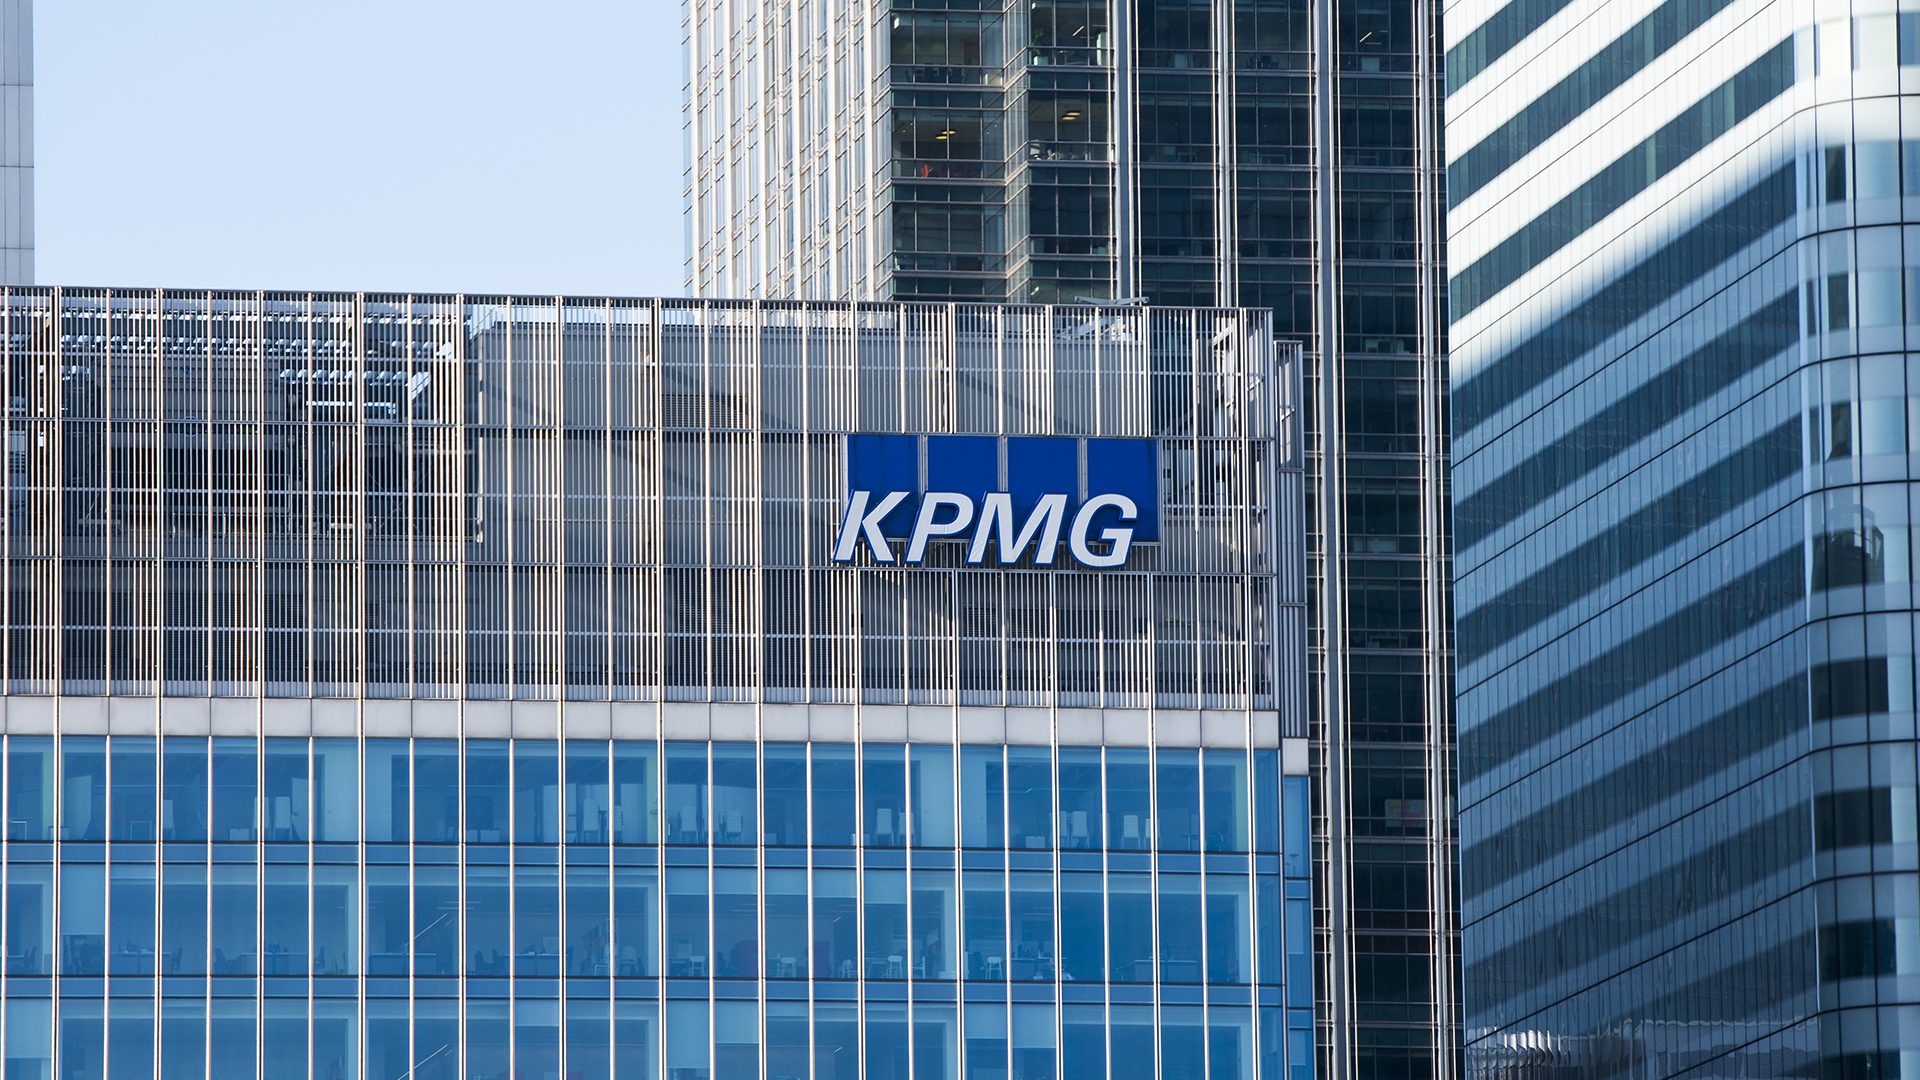 KPMG elevates 2 female partners amid probe into UK chairman’s remarks